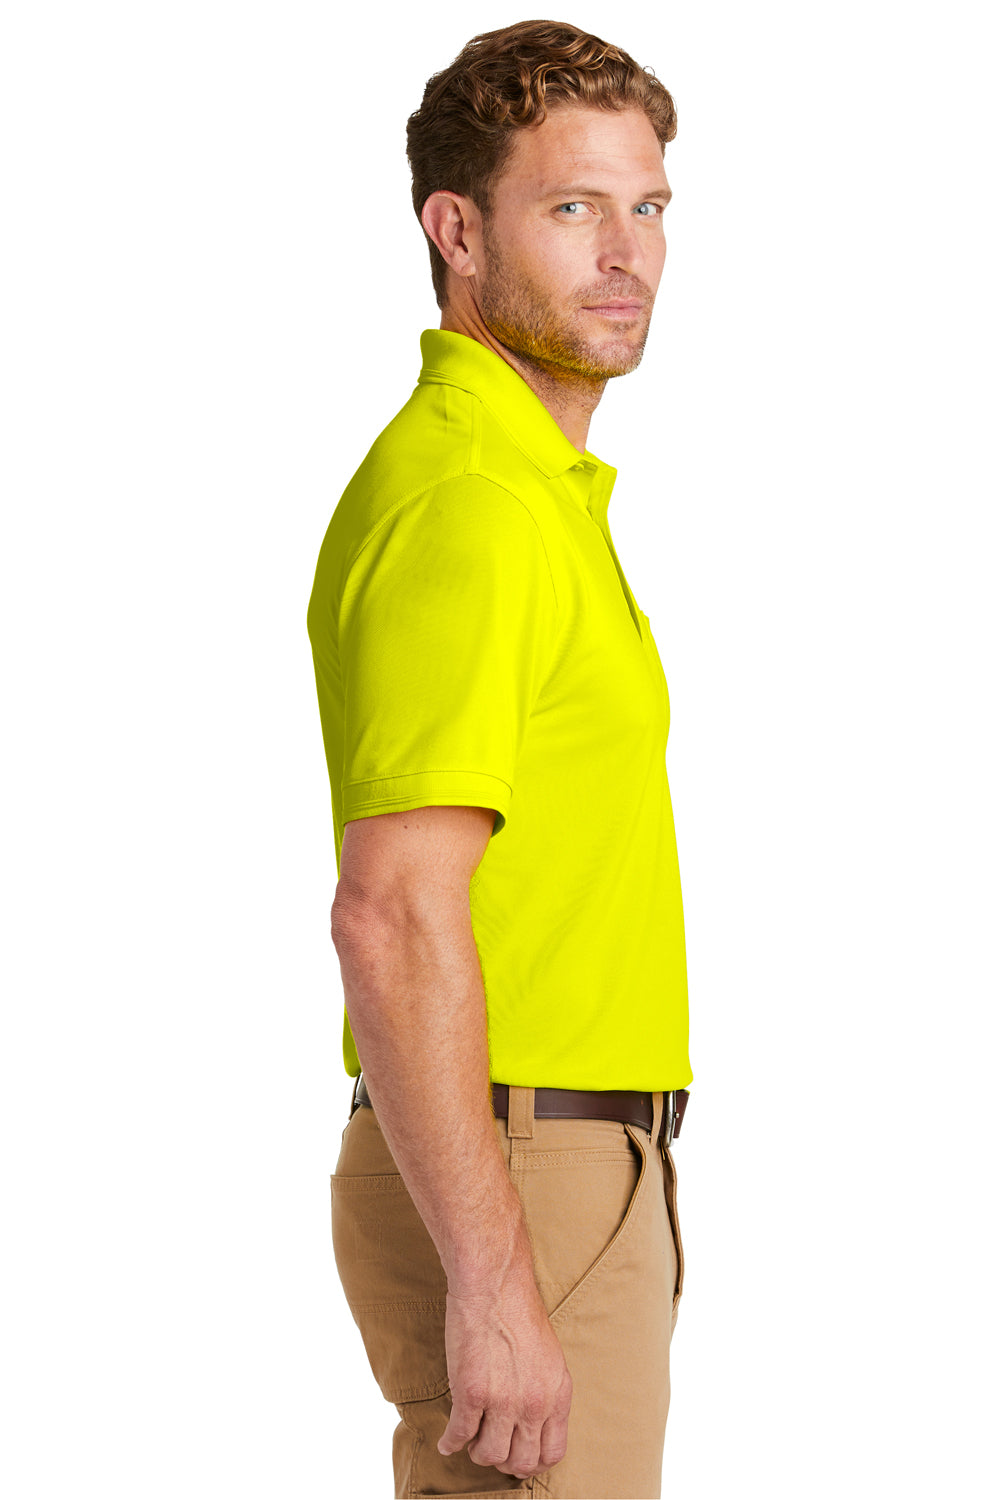 CornerStone CS4020P Mens Industrial Moisture Wicking Short Sleeve Polo Shirt w/ Pocket Safety Yellow Side